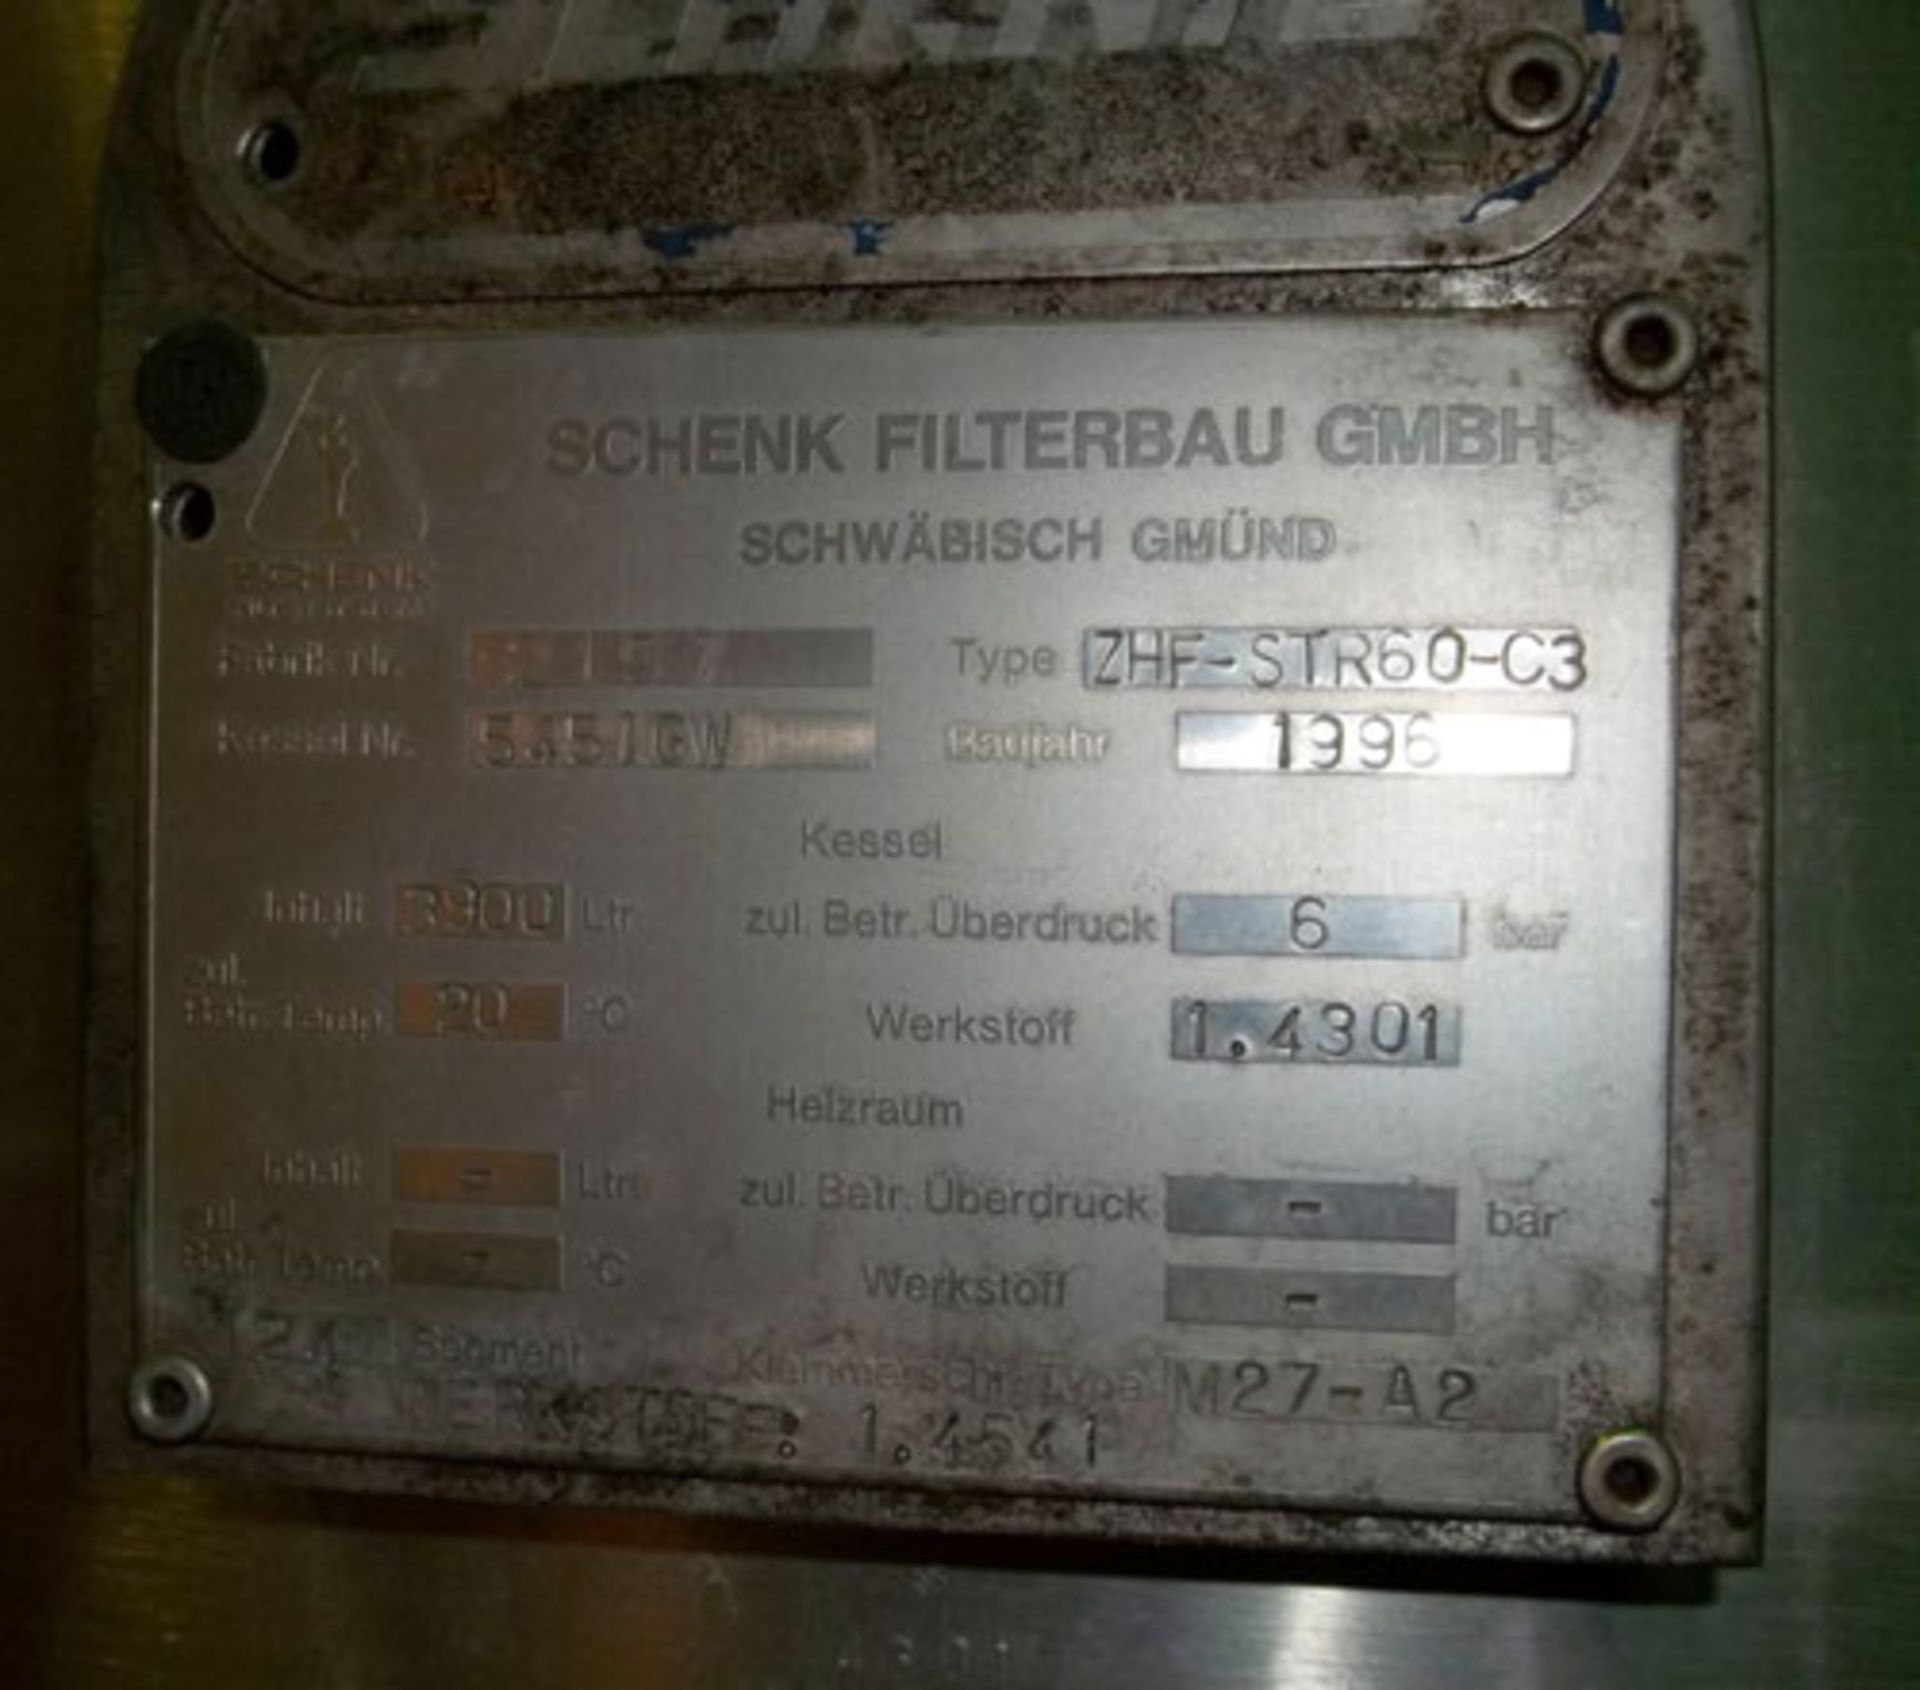 Schenk “Kieselgur” type HF-STR60-C3 stainless steel filtration system. 500 HL capacity. New 1996. - Image 5 of 9